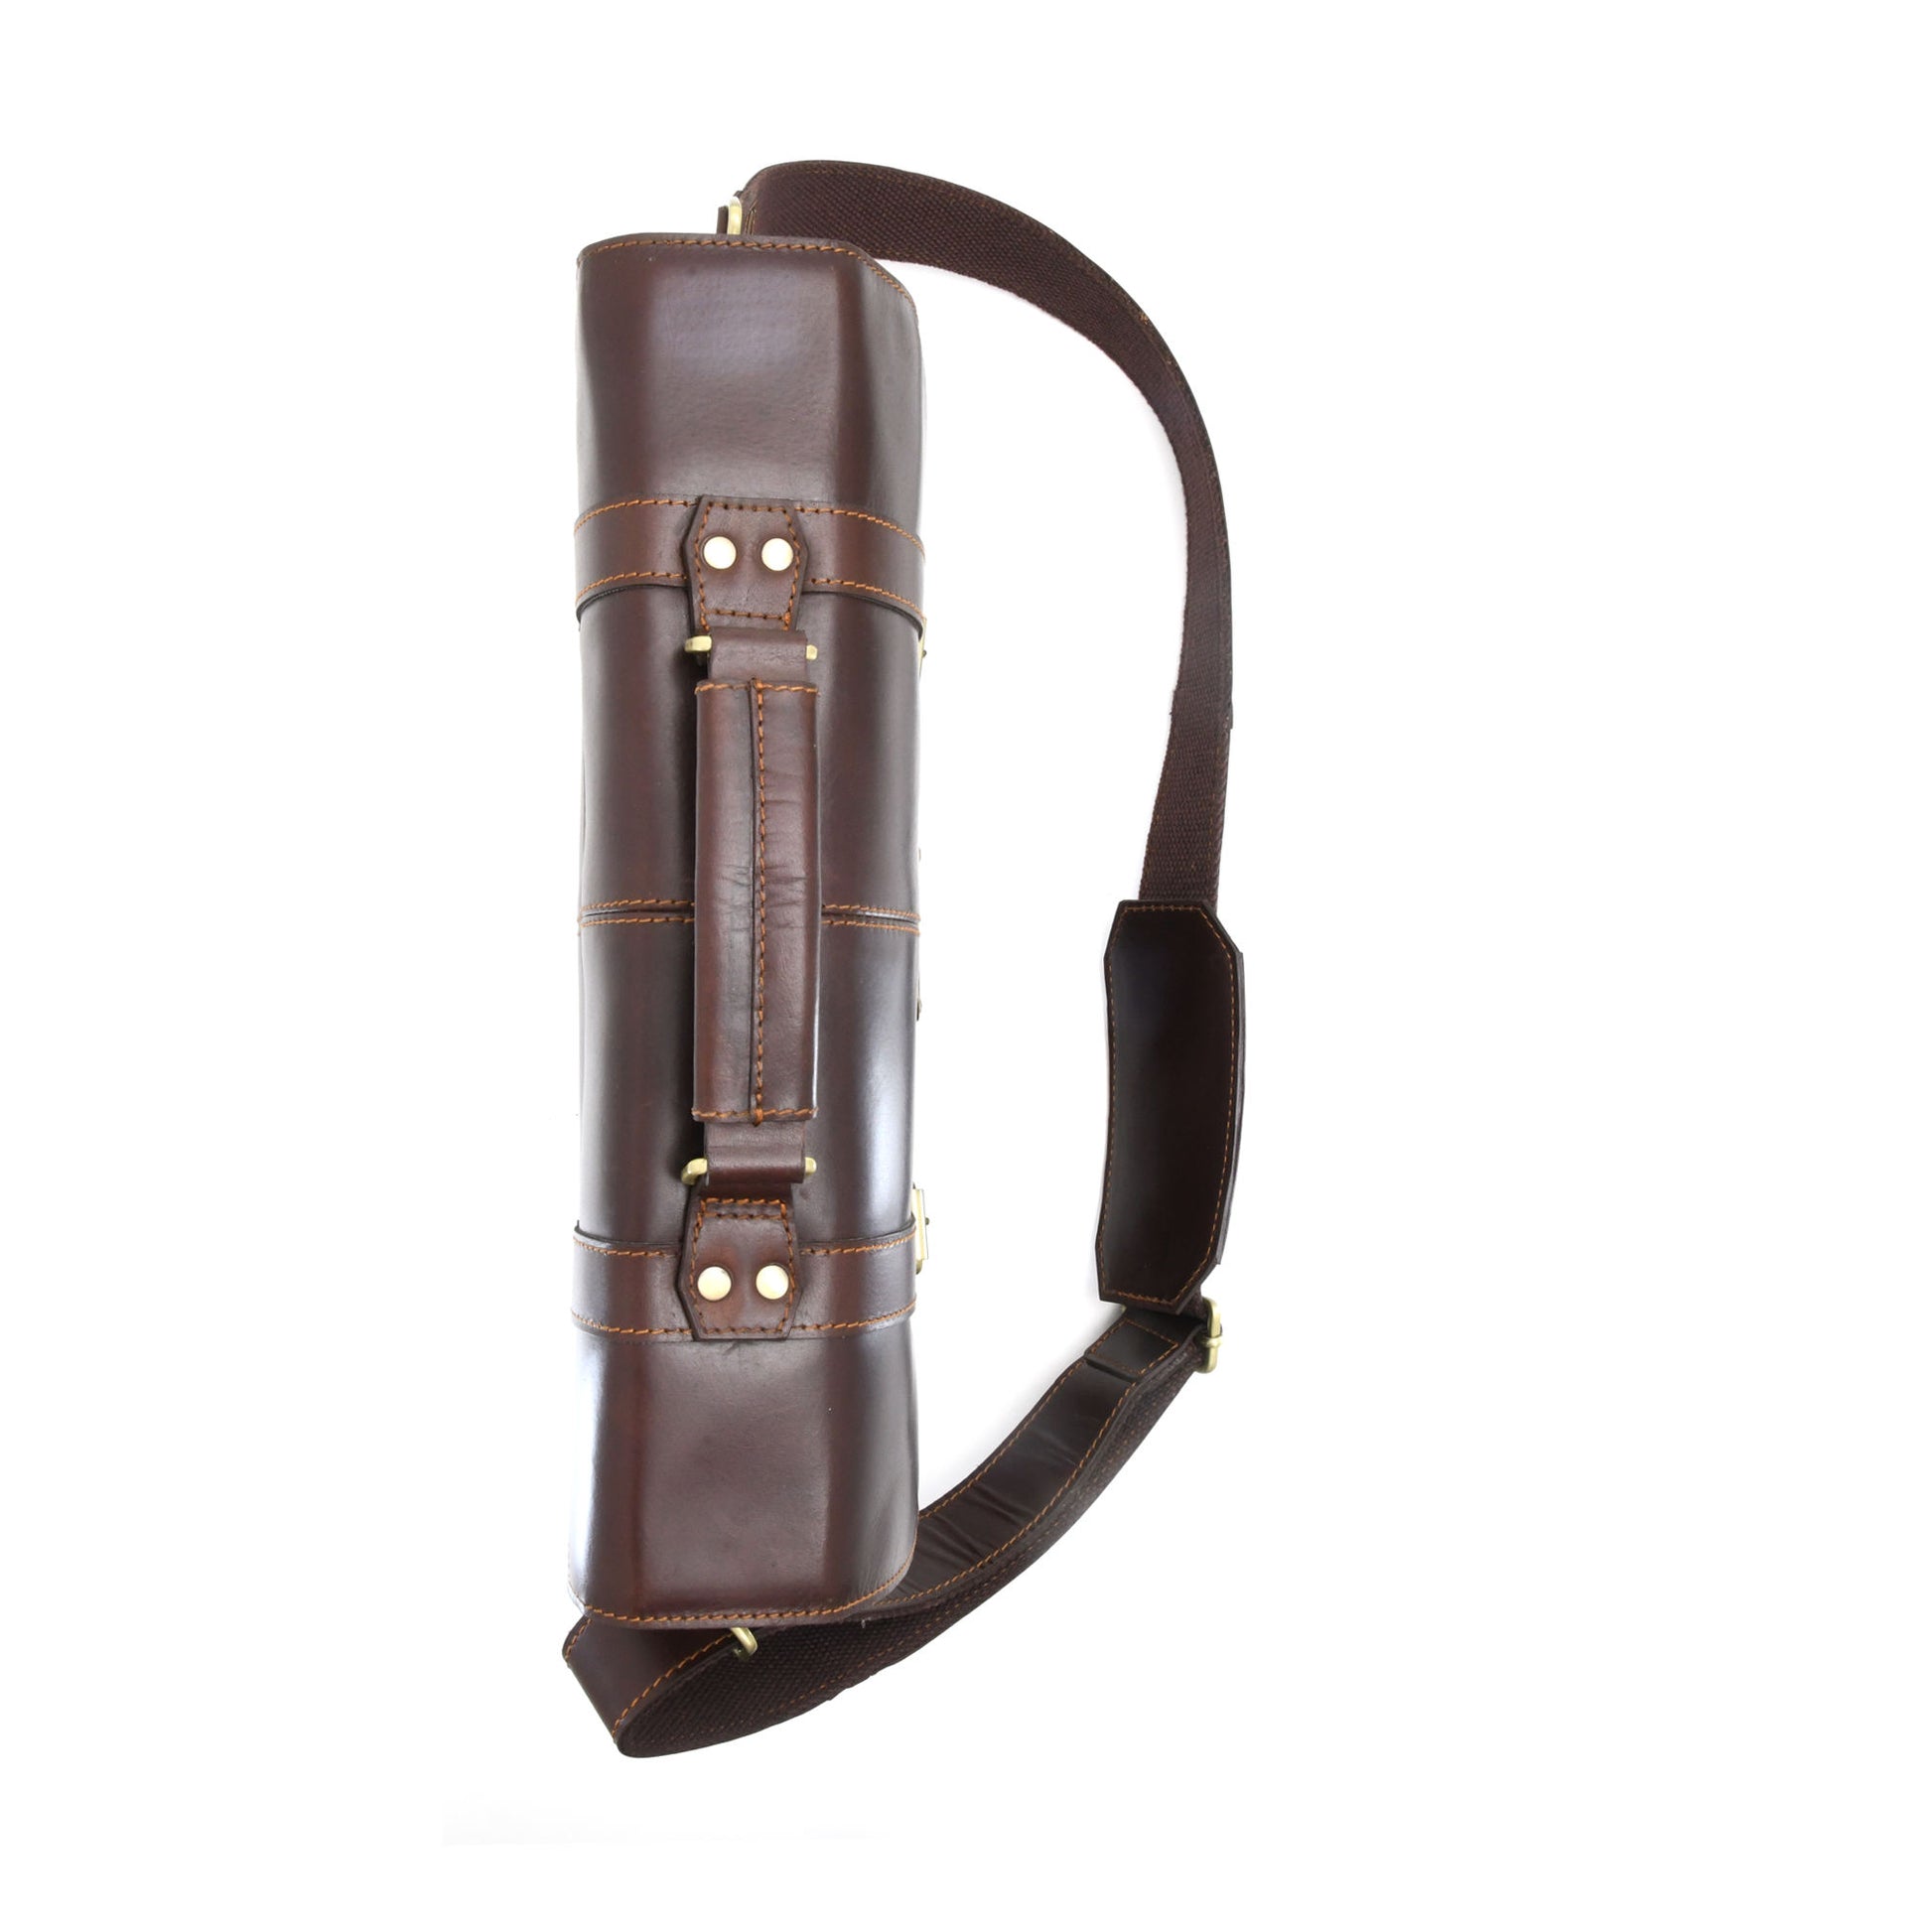 Style n Craft 392007 Portfolio Bag in Full Grain Dark Brown Leather - Top Closed View - Vertical